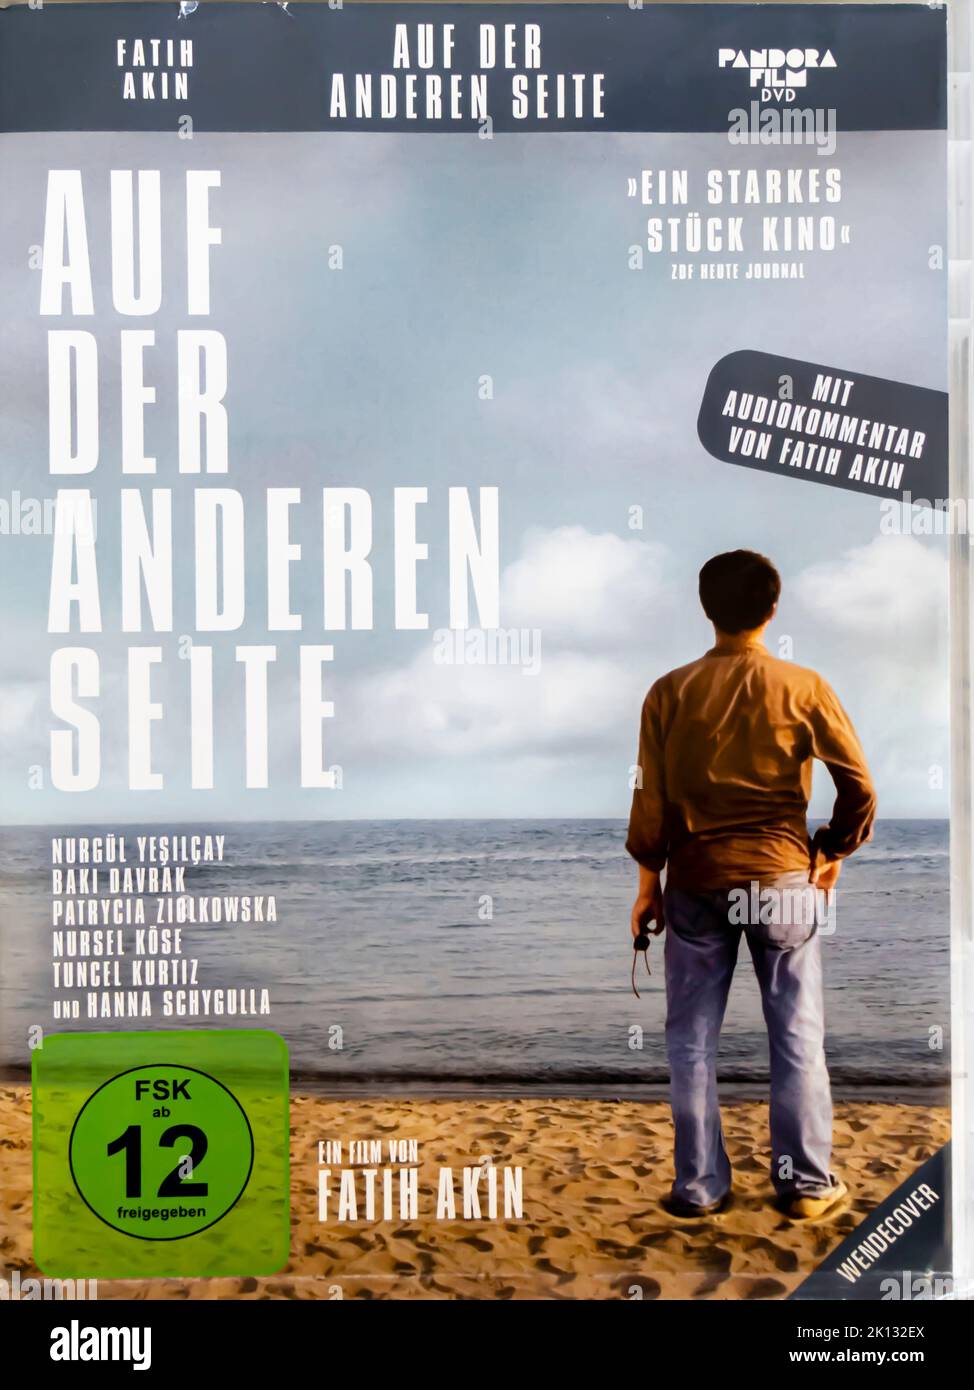 The Edge of Heaven (Auf der anderen Seite) 2007. Fatih Akin film. DVD cover Stock Photo